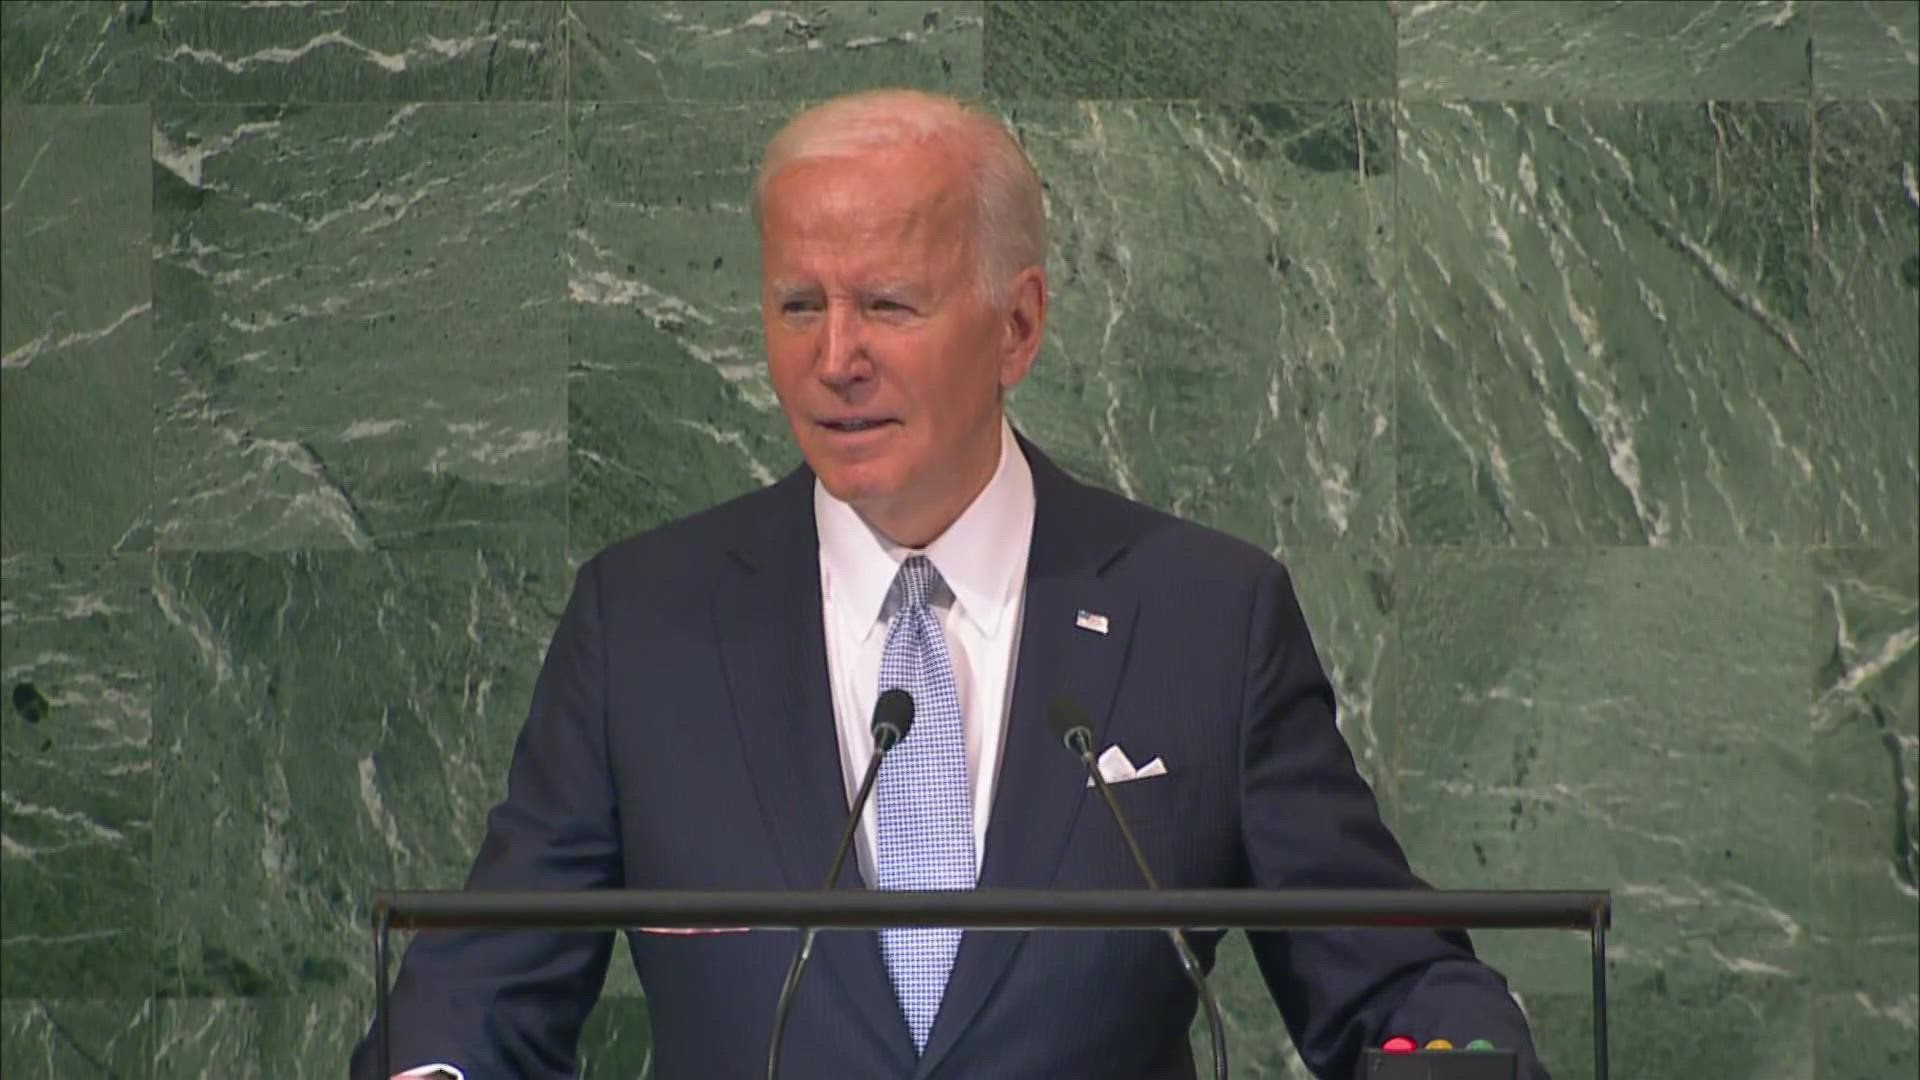 President Joe Biden spoke to world leaders on Russia's war in Ukraine, climate change, health and global security.